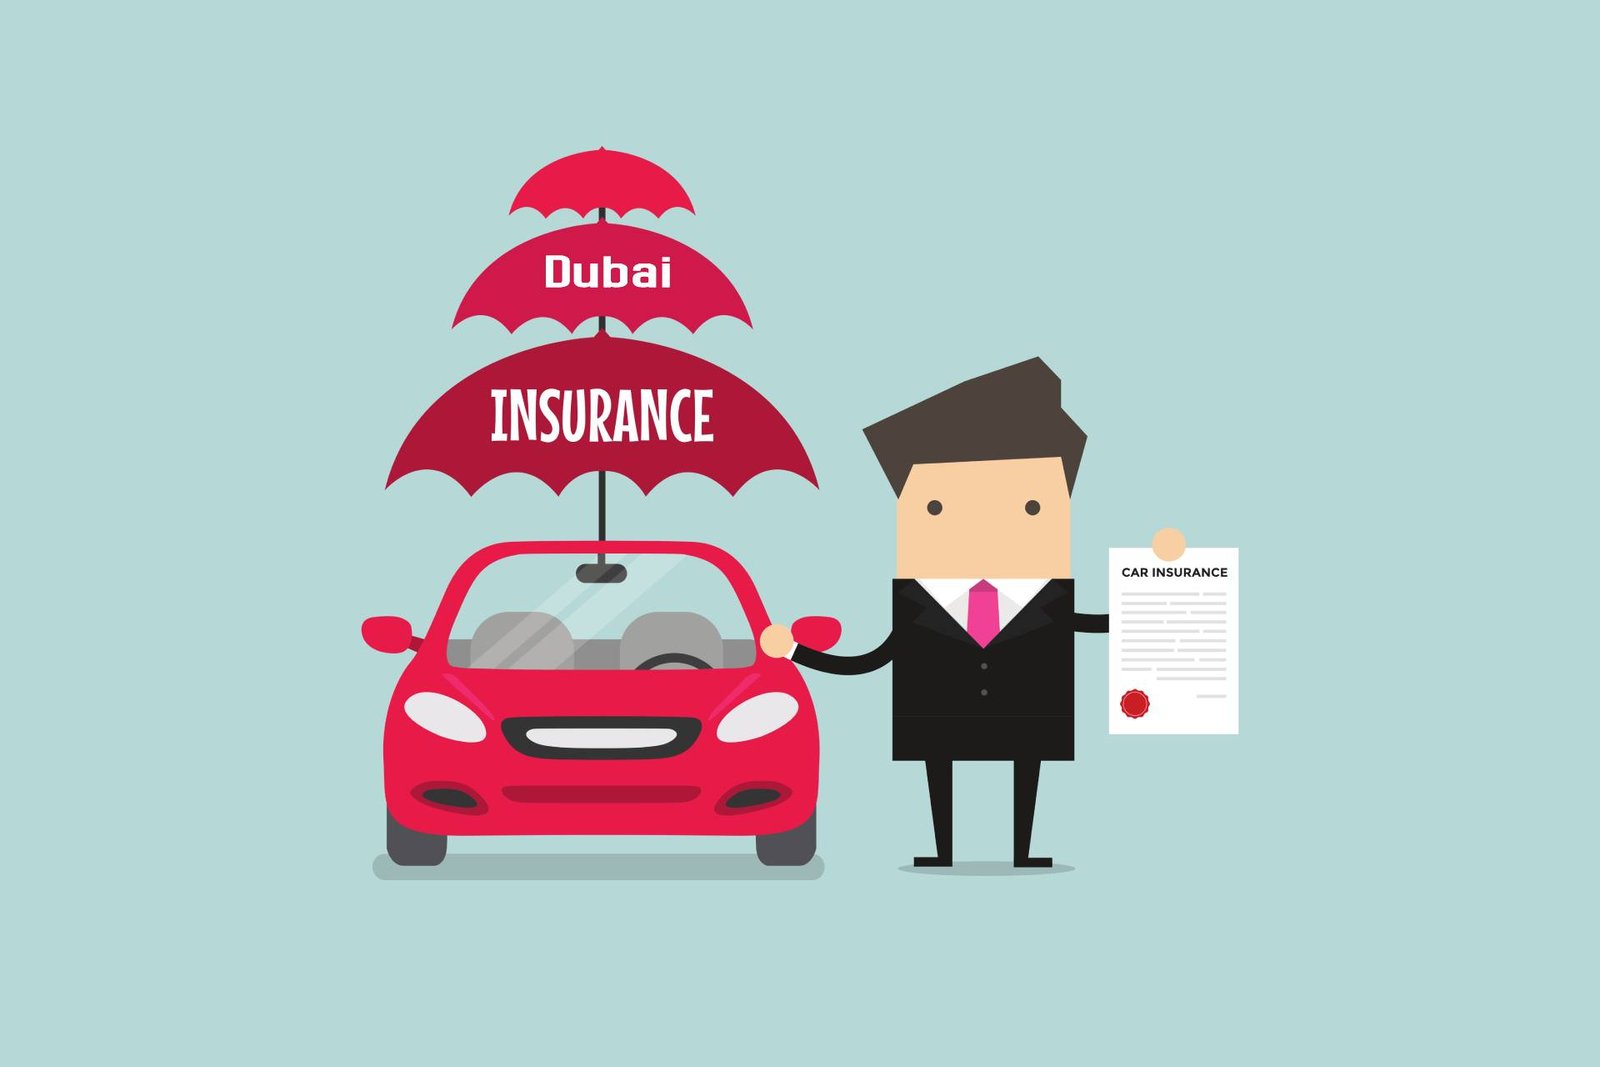 Dubai car insurance companies